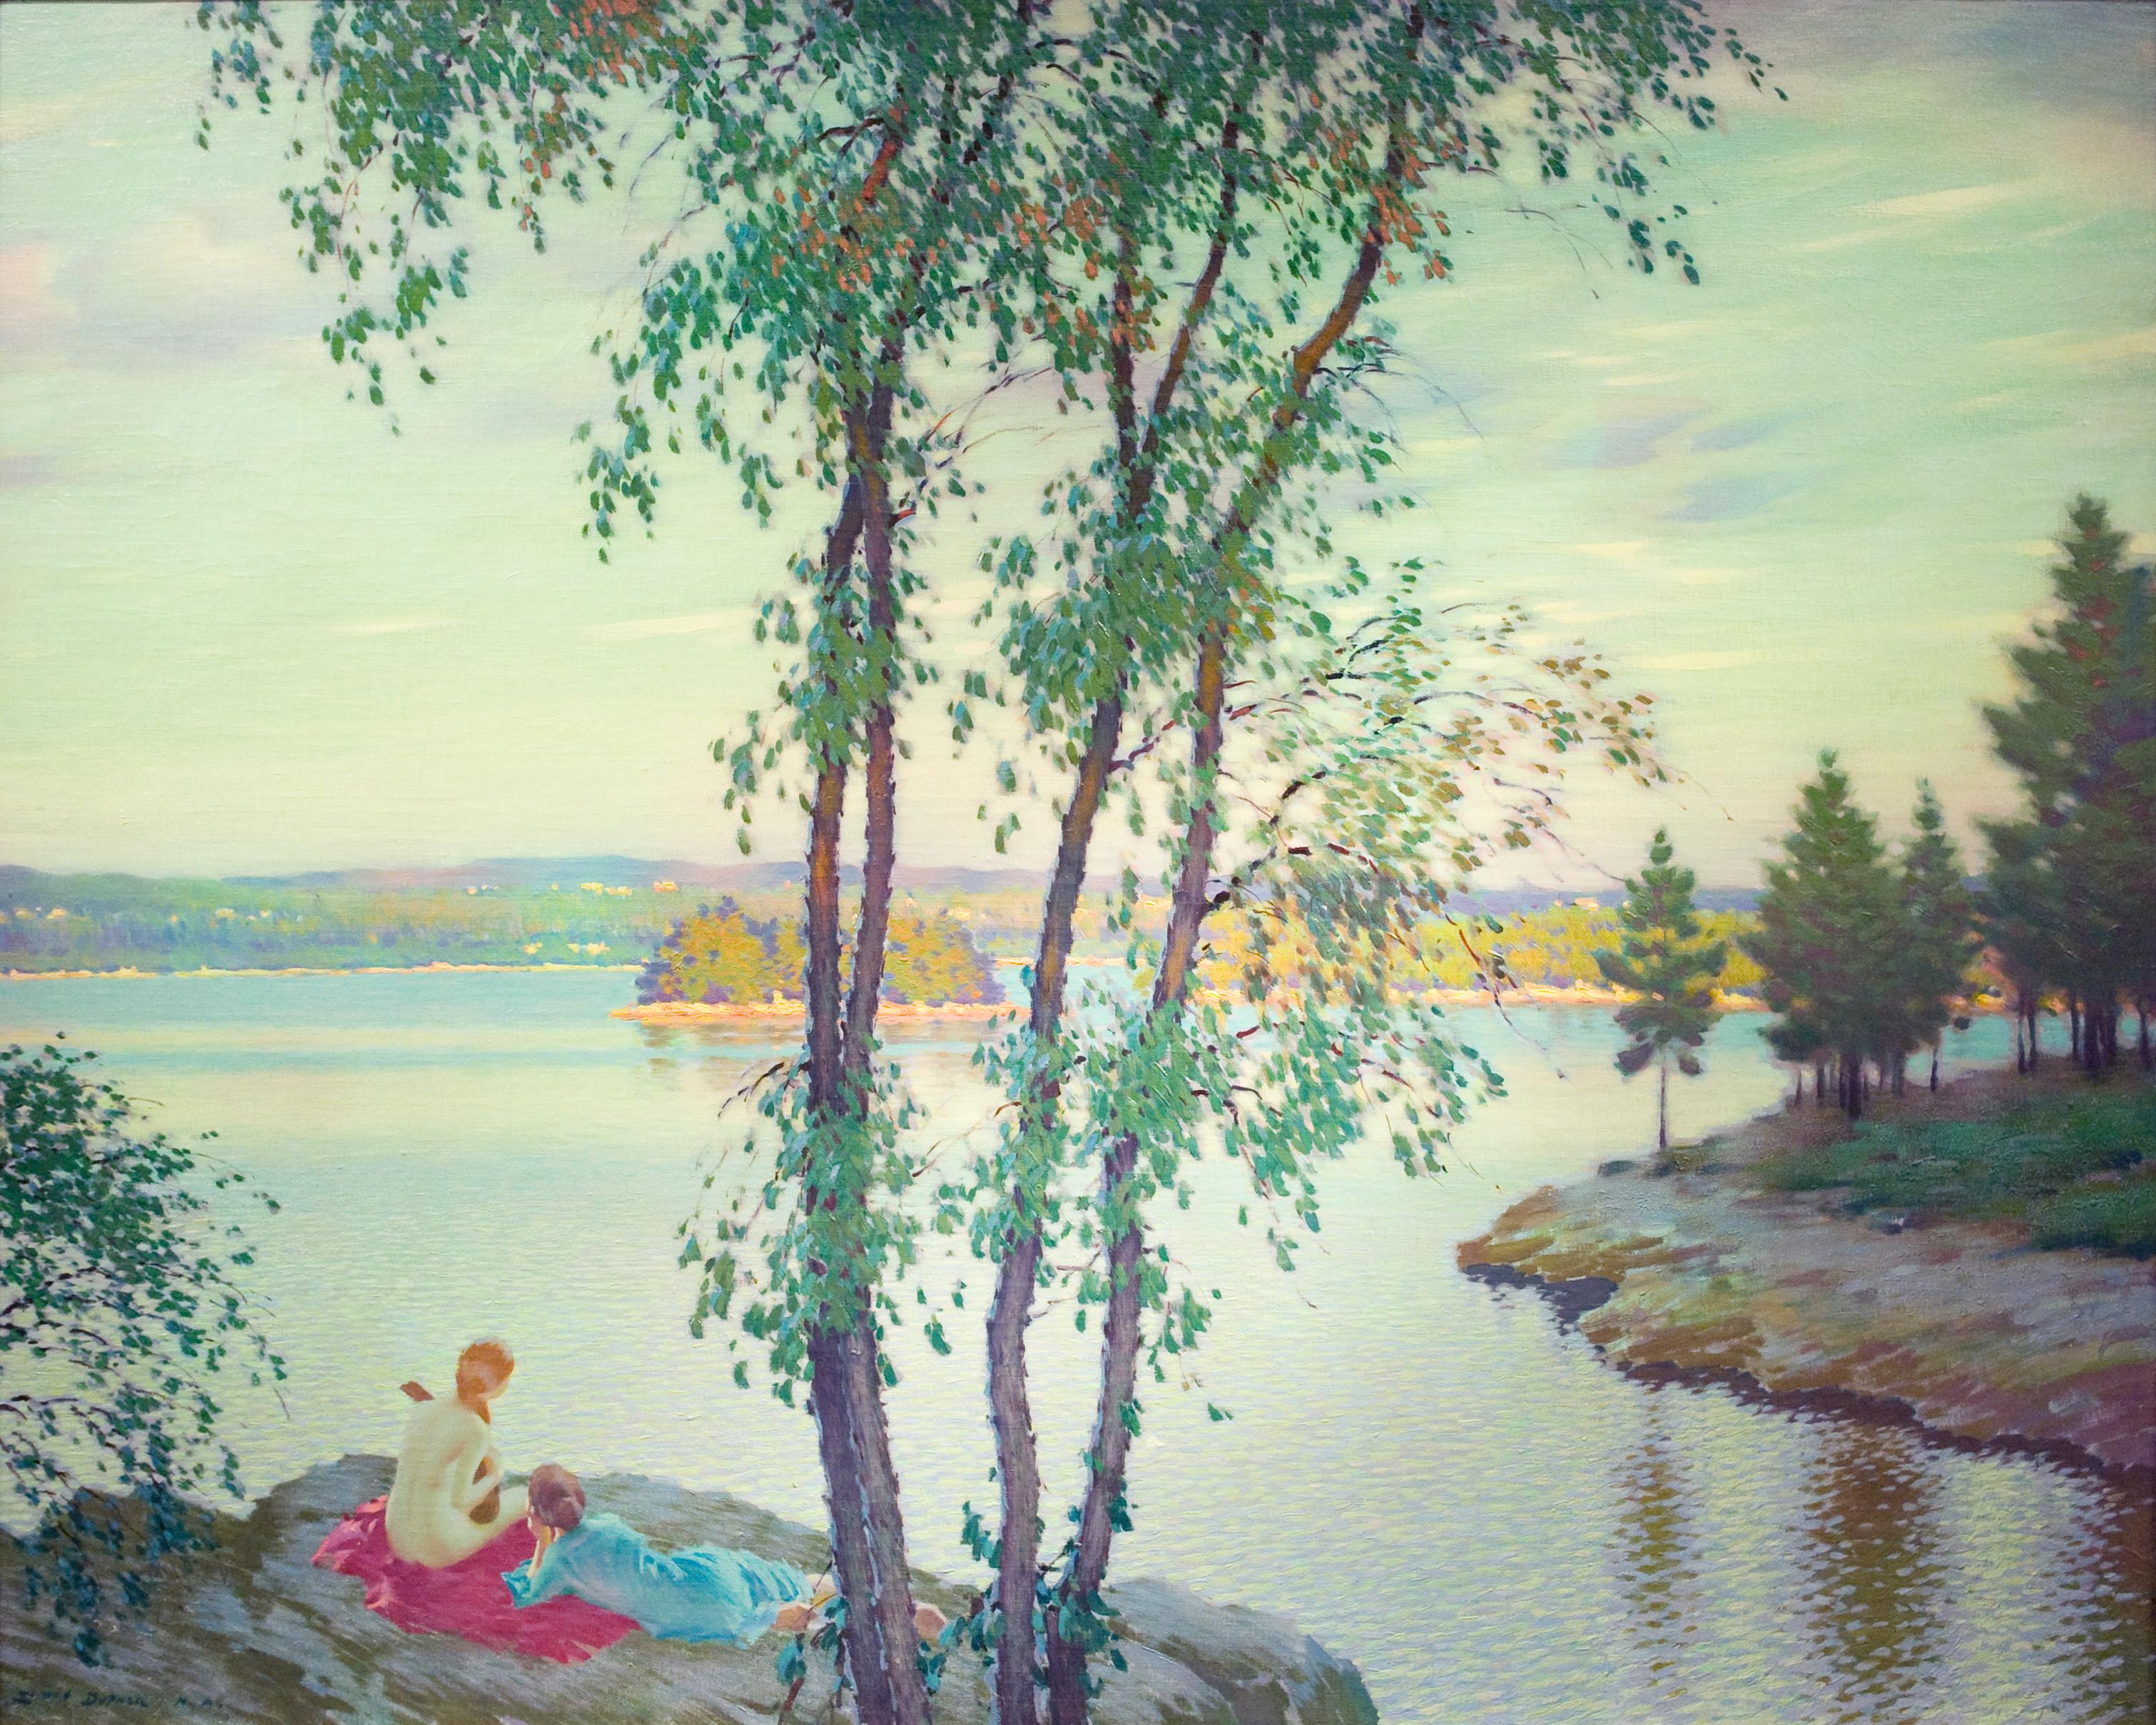 Edward Dufner Landscape Painting - American Impressionist Landscape with female figures, titled "Evening Song"